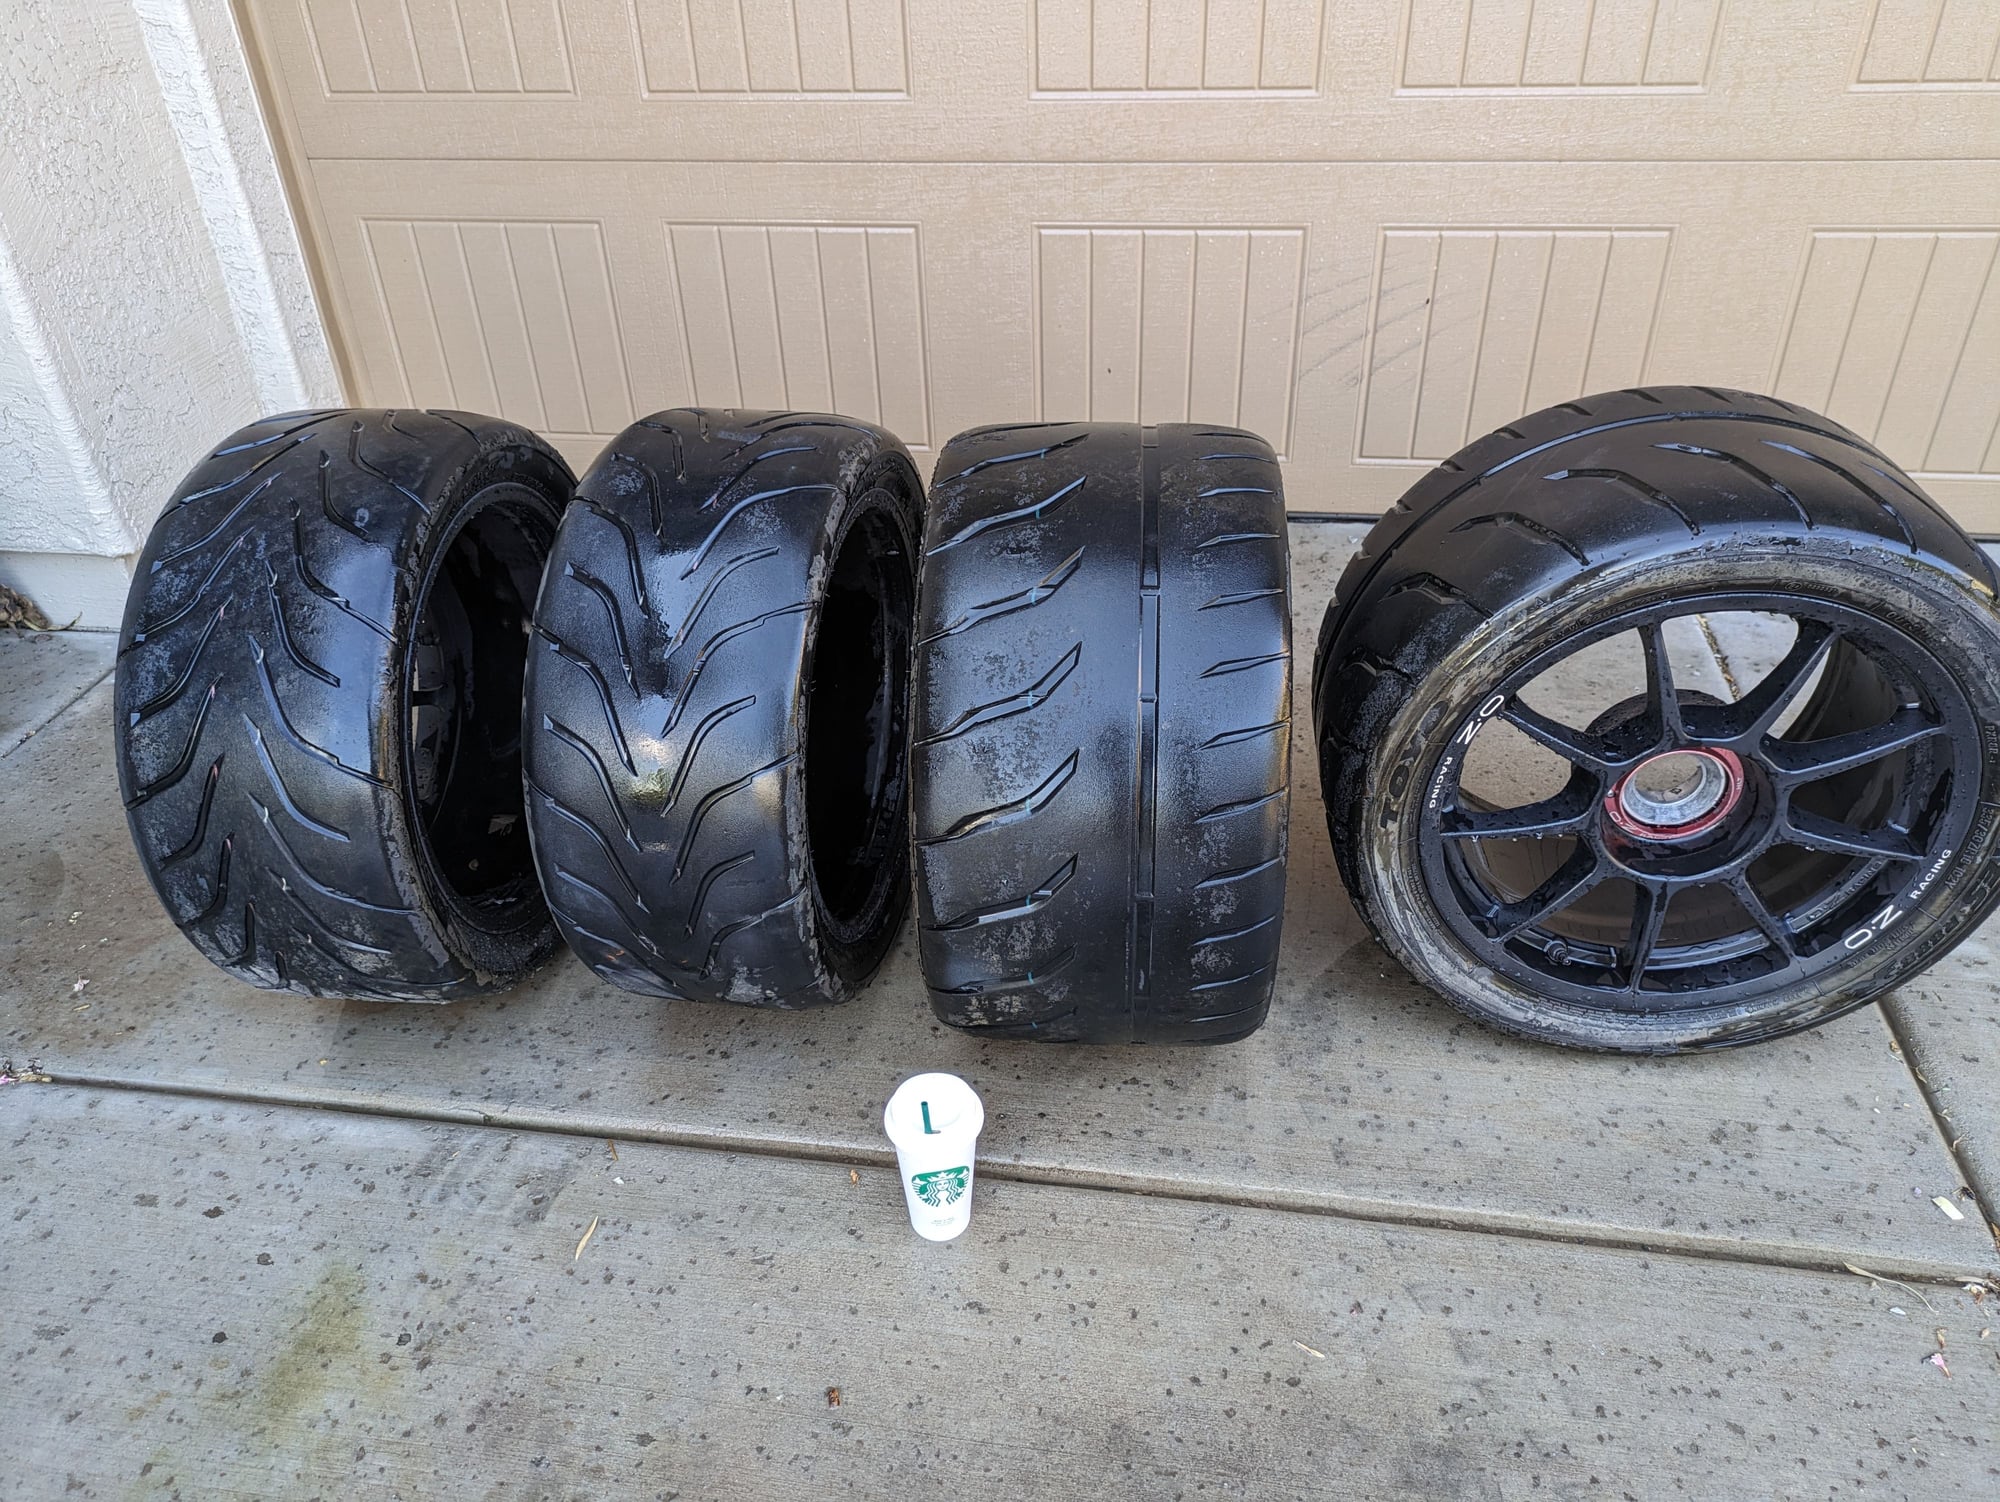 Wheels and Tires/Axles - OZ Racing ALLEGGERITA Centerlock wheels with R888R Proxes. 997 Widebody offset - Used - Phoenix, AZ 85396, United States